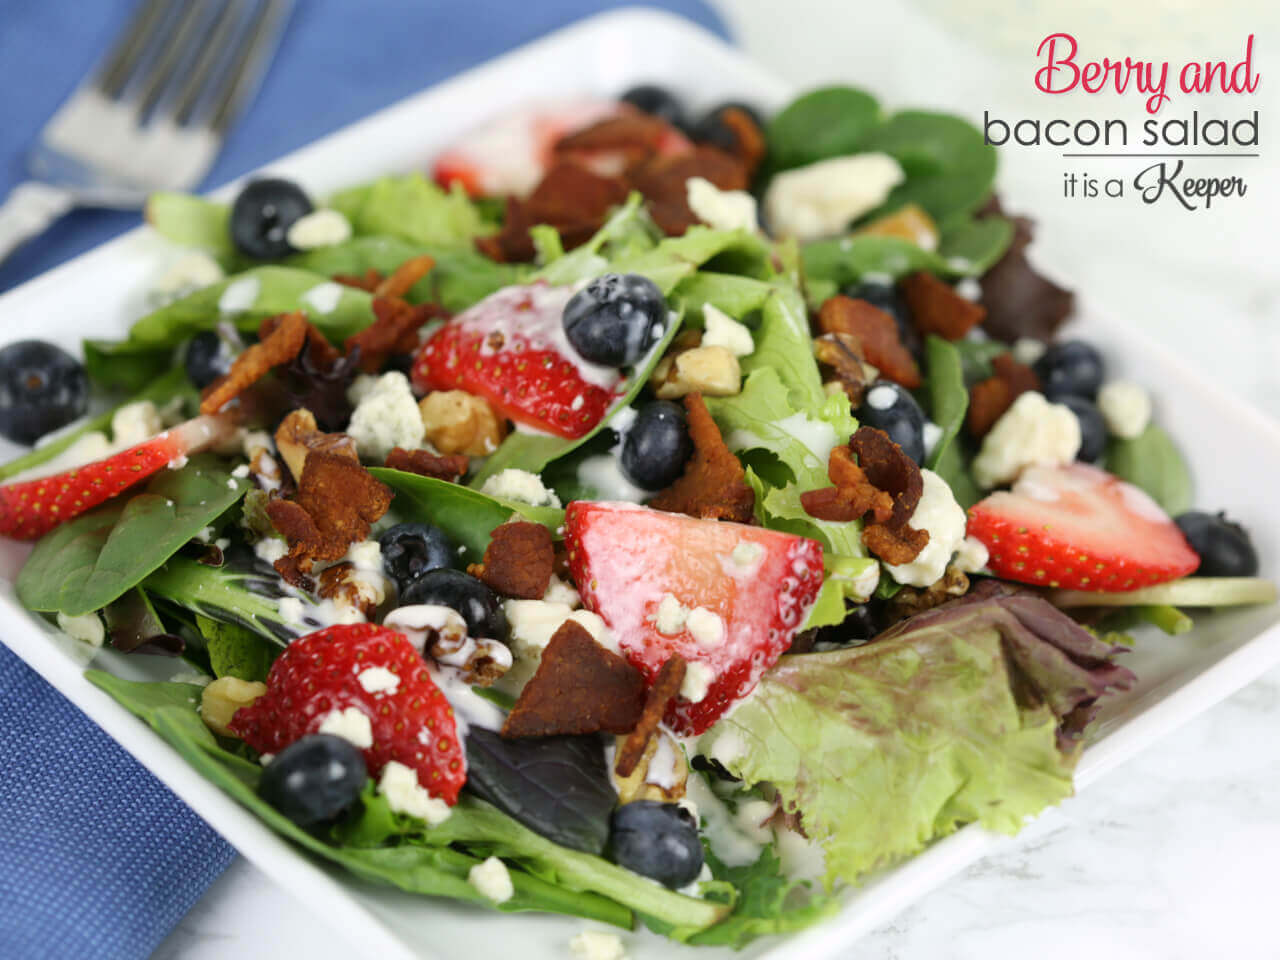 Bacon and Berry Salad - this fresh salad recipe is loaded with bacon and berries and topped with a Mojito dressing